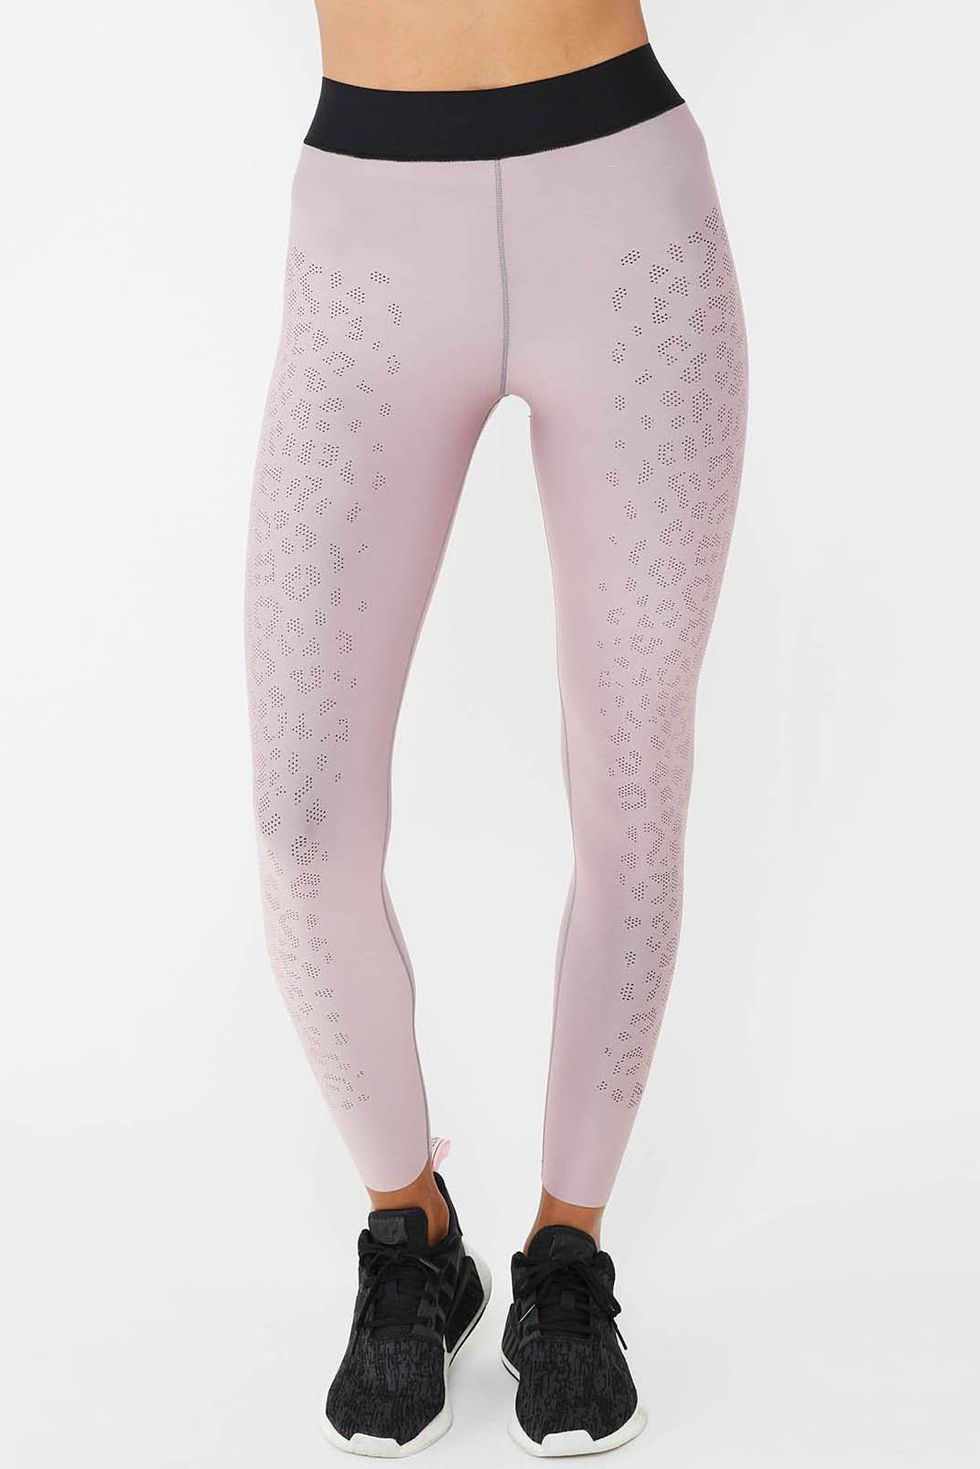 Leopard Yoga Pants with Pocket Women Fashion Sweating Hip Lifting